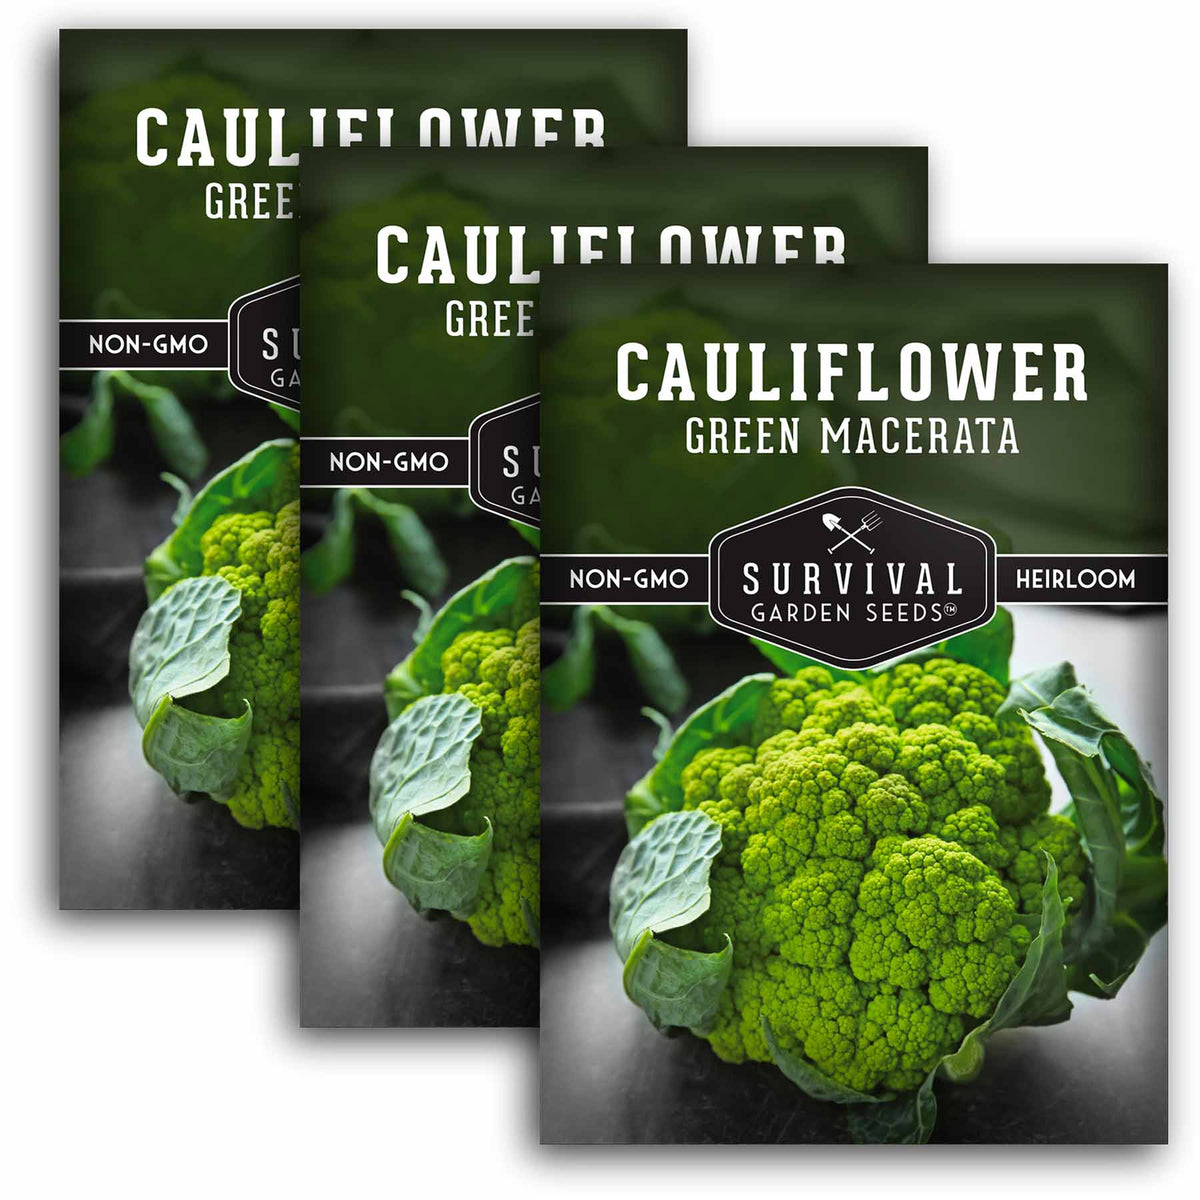 3 packets of Green Macerata Cauliflower seeds